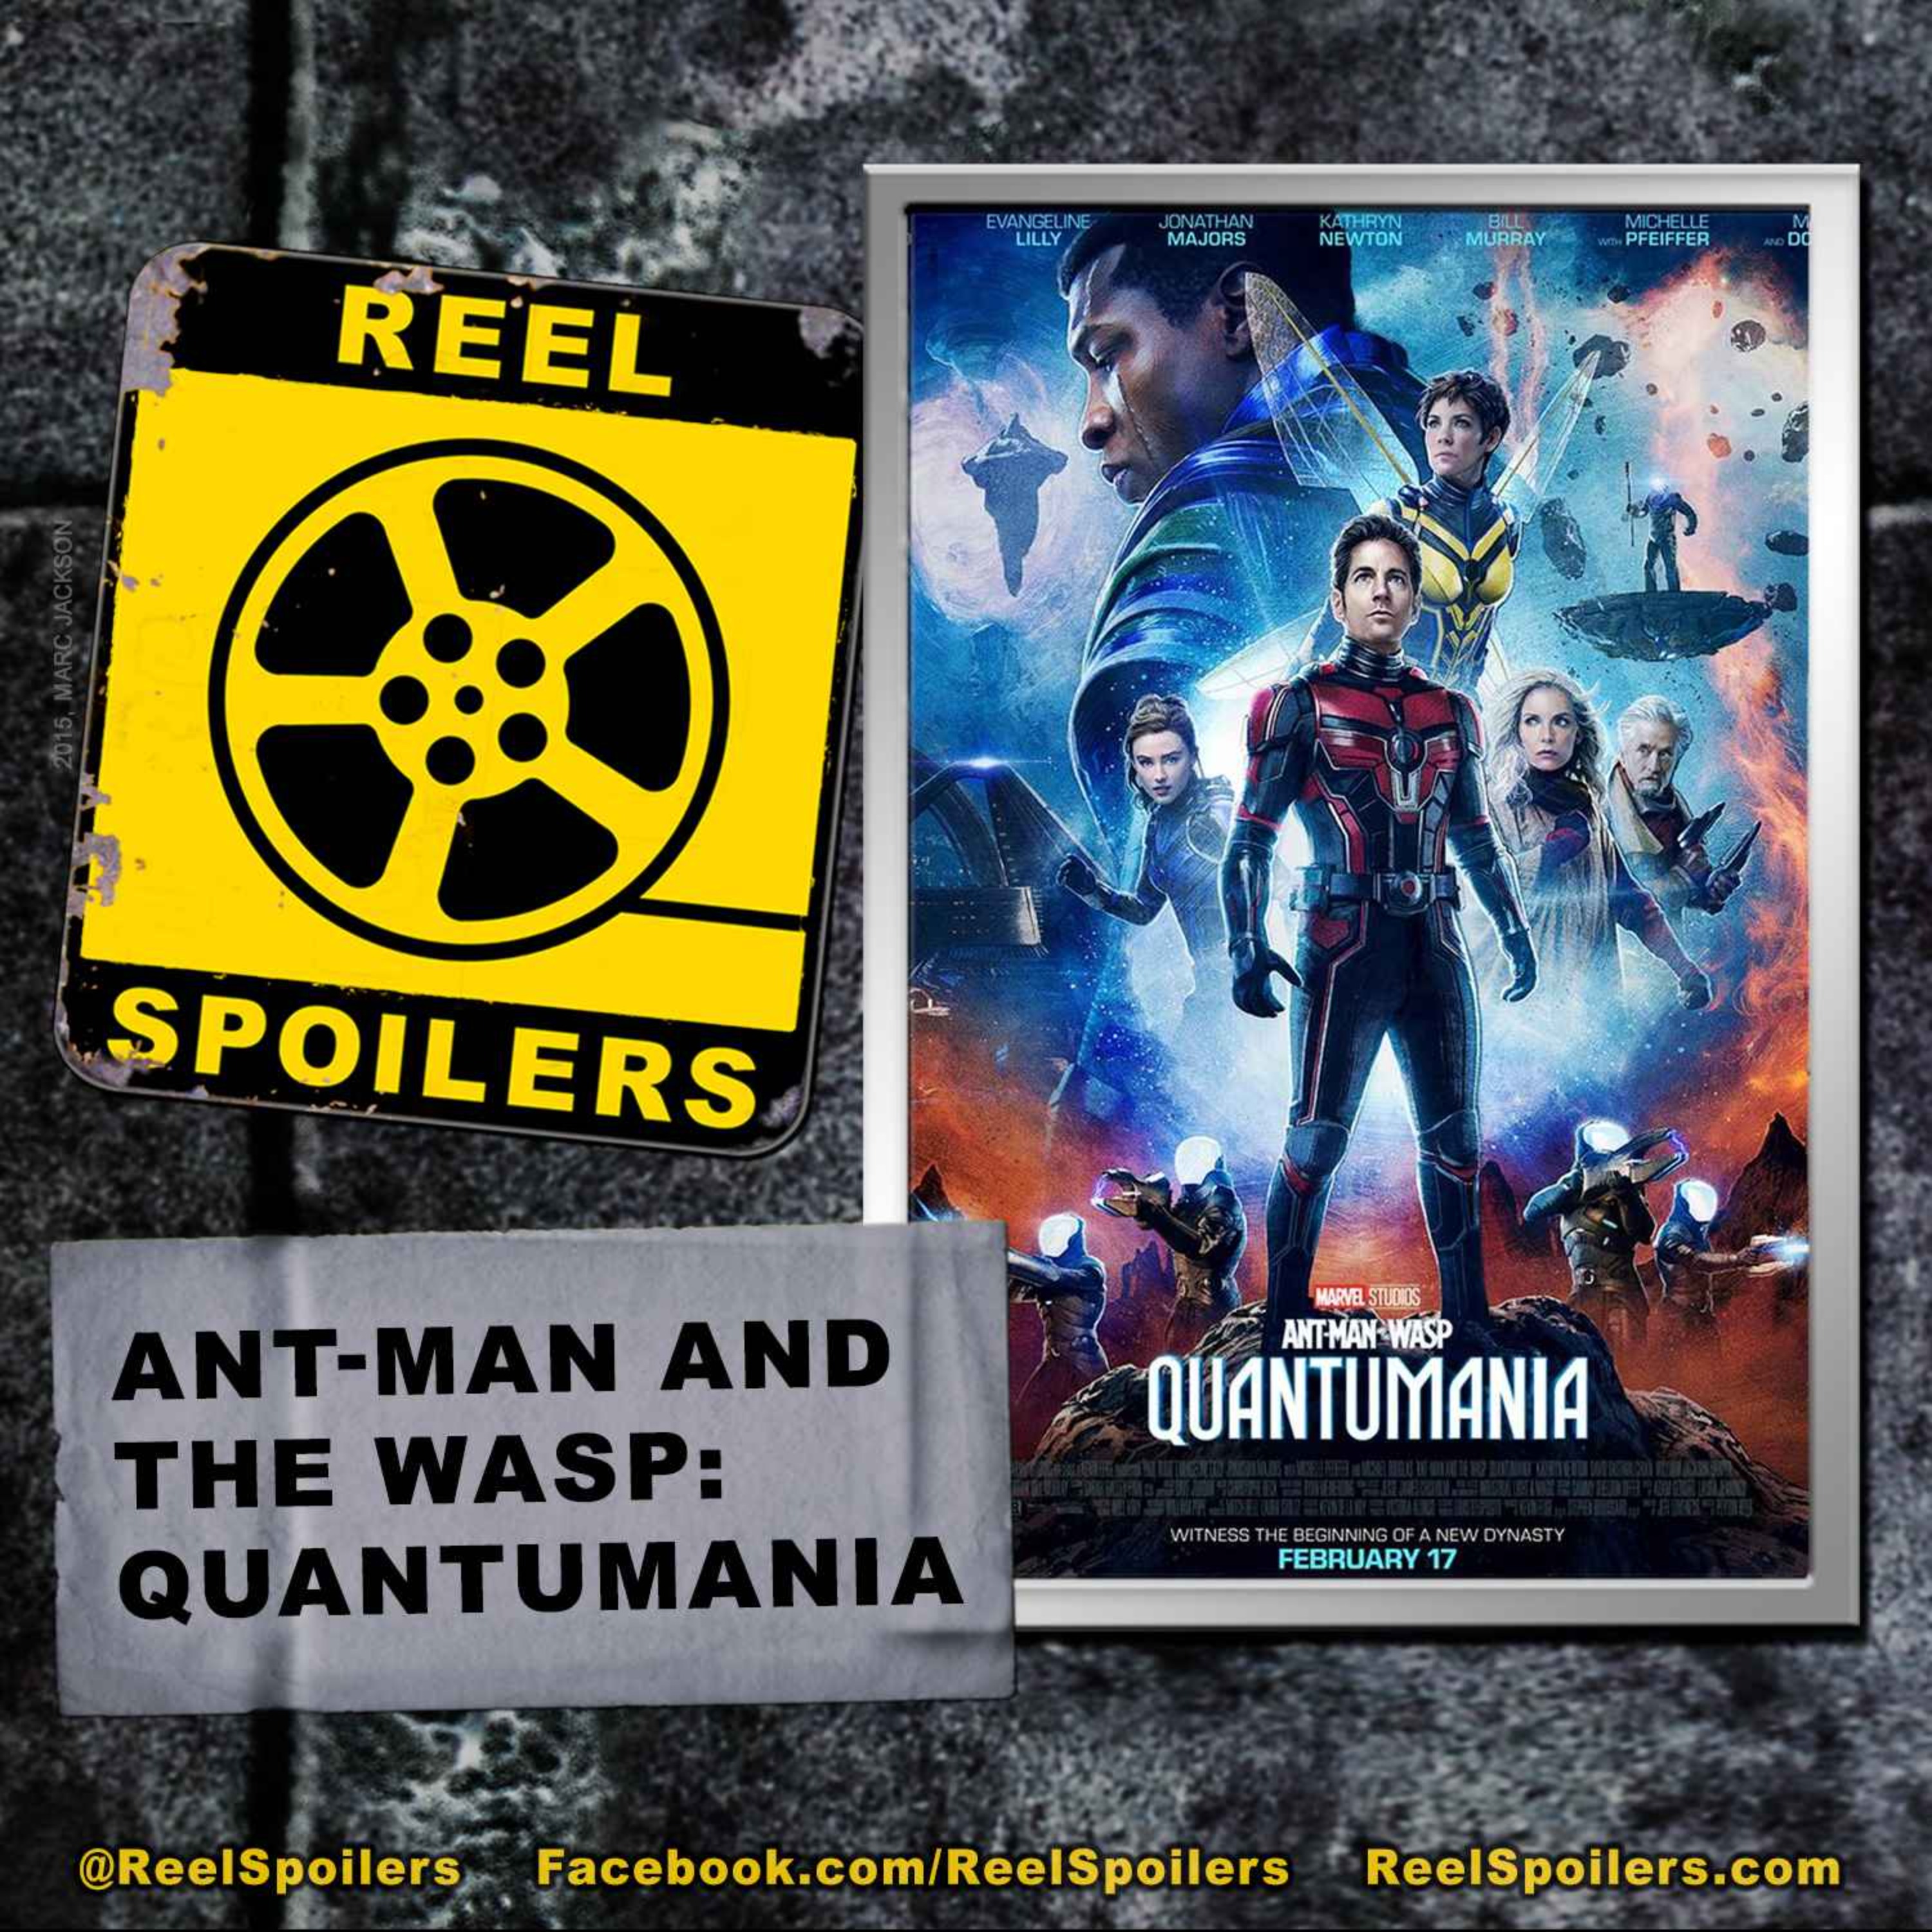 ANT-MAN AND THE WASP: QUANTUMANIA Starring Paul Rudd, Michelle Pfeiffer, Michael Douglas